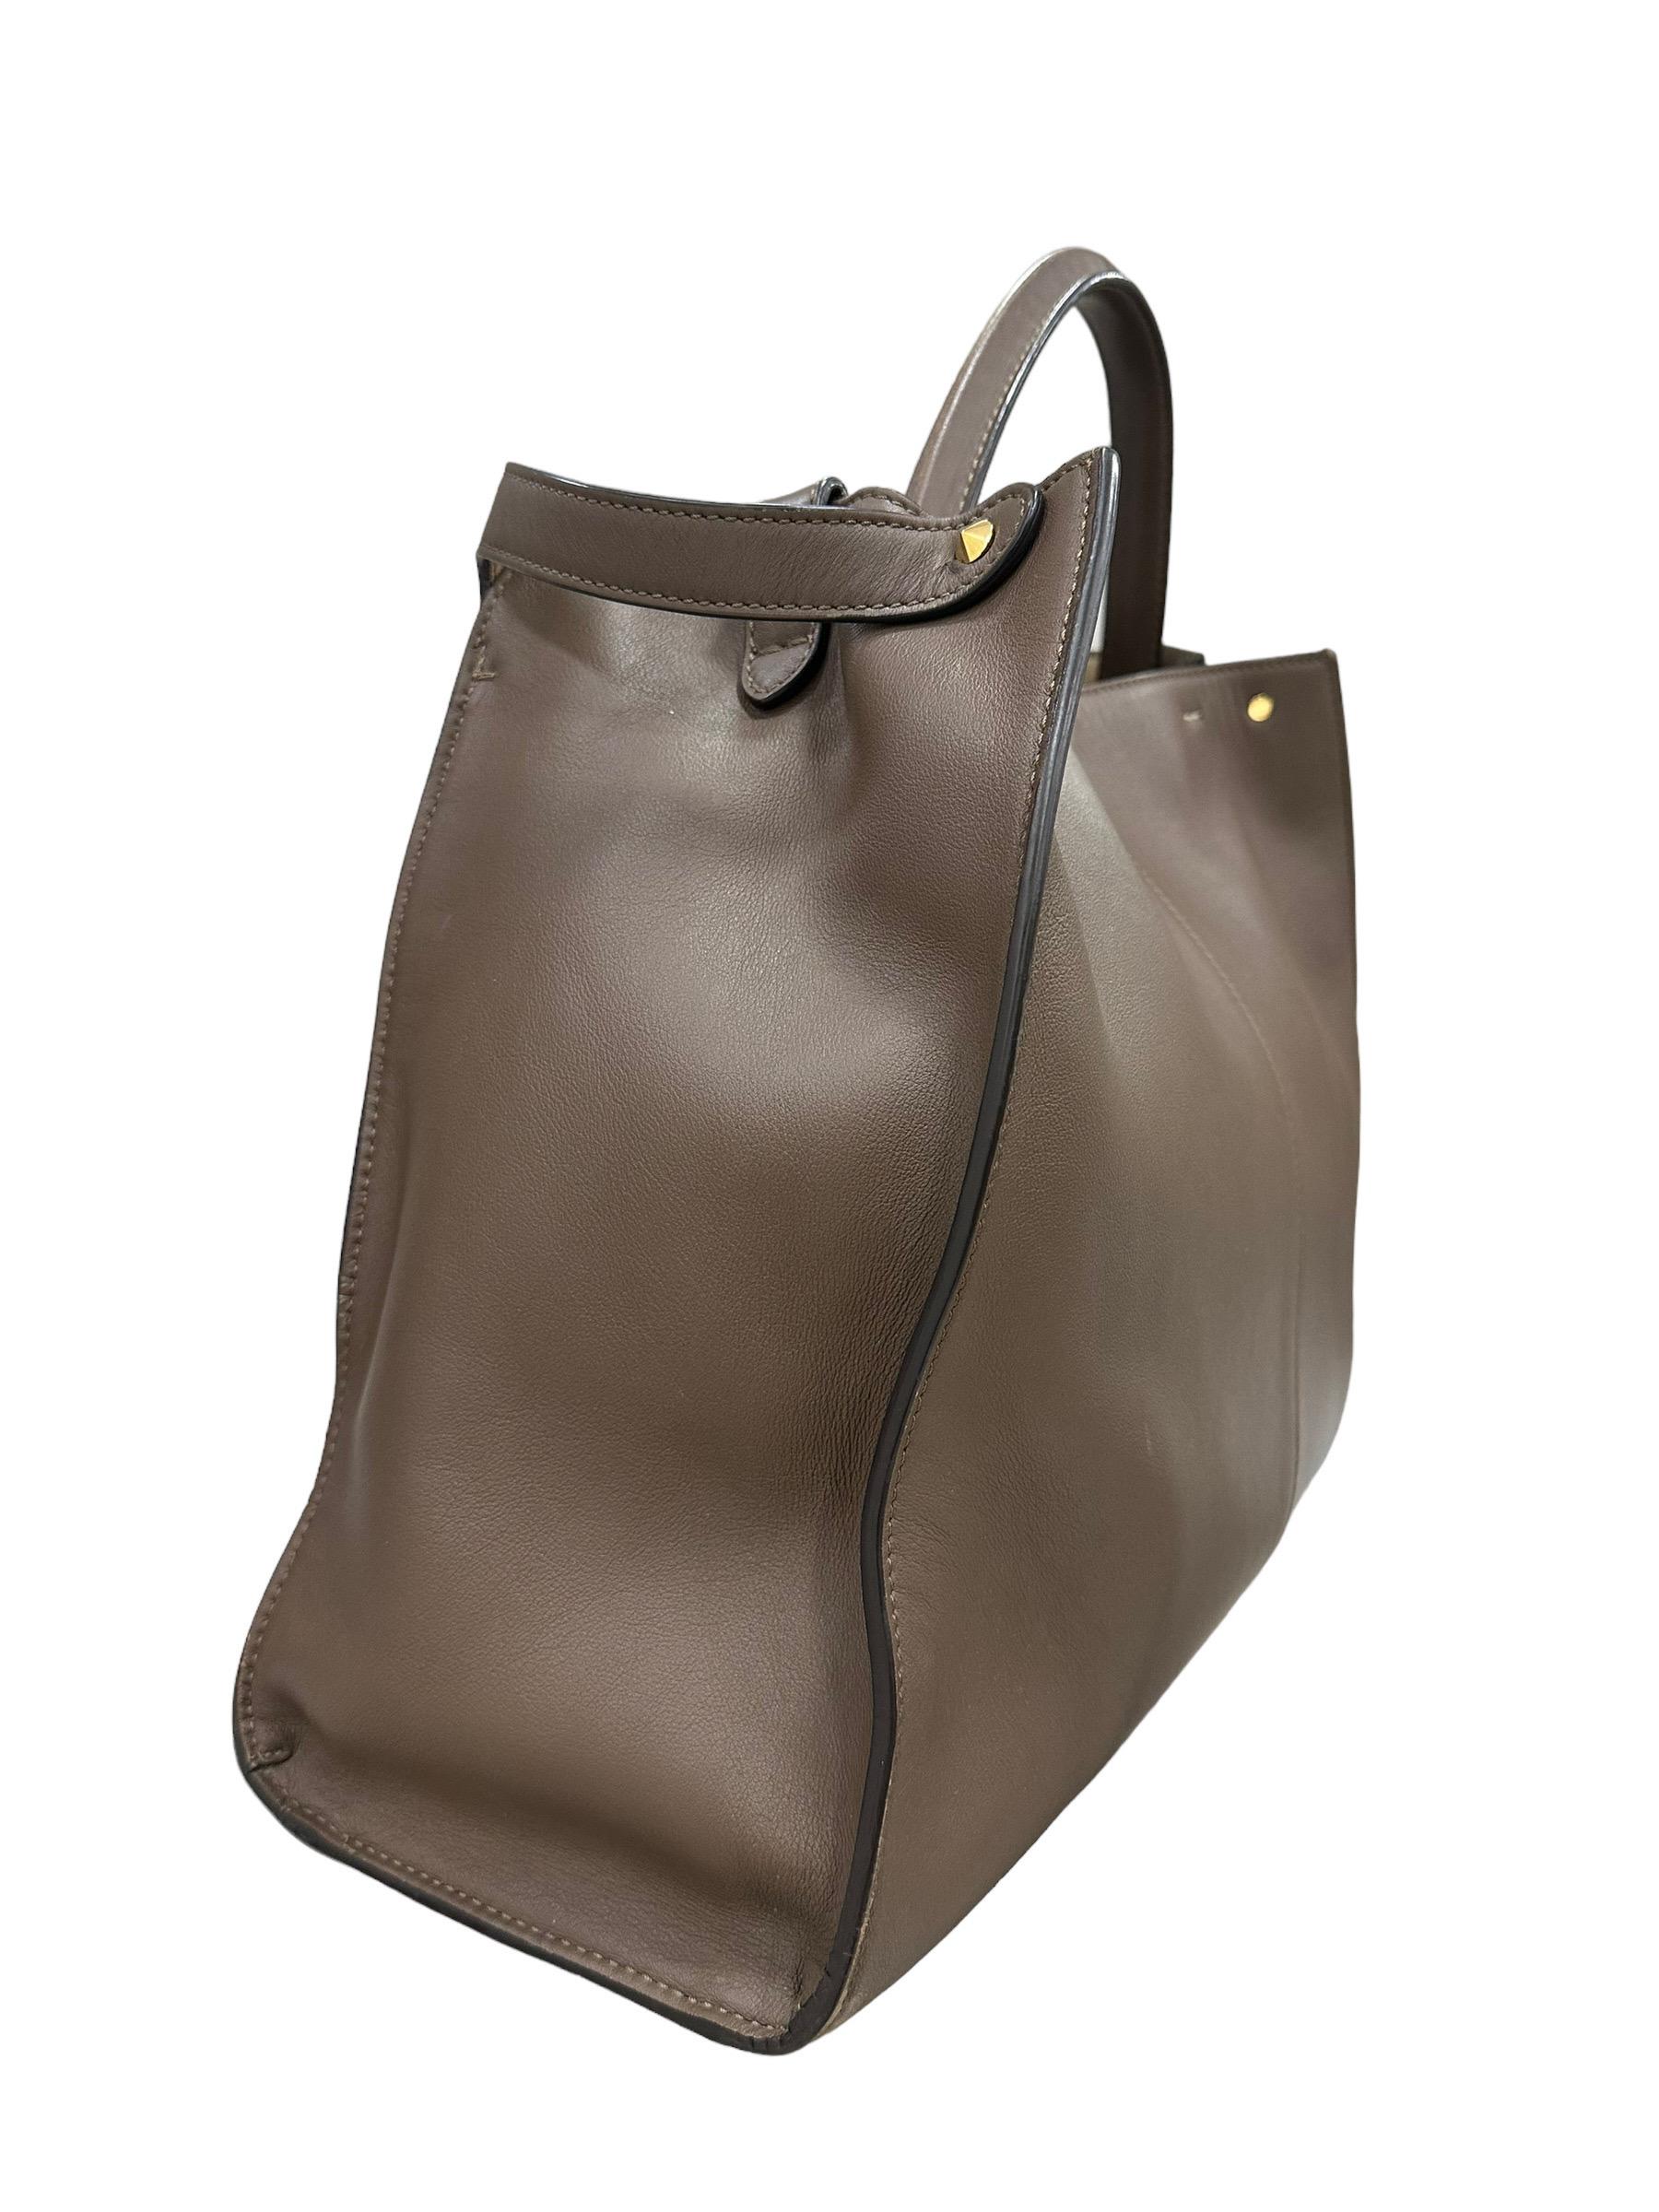 Women's Fendi Peekaboo X-Lite Mud Leather Top Handle Bag